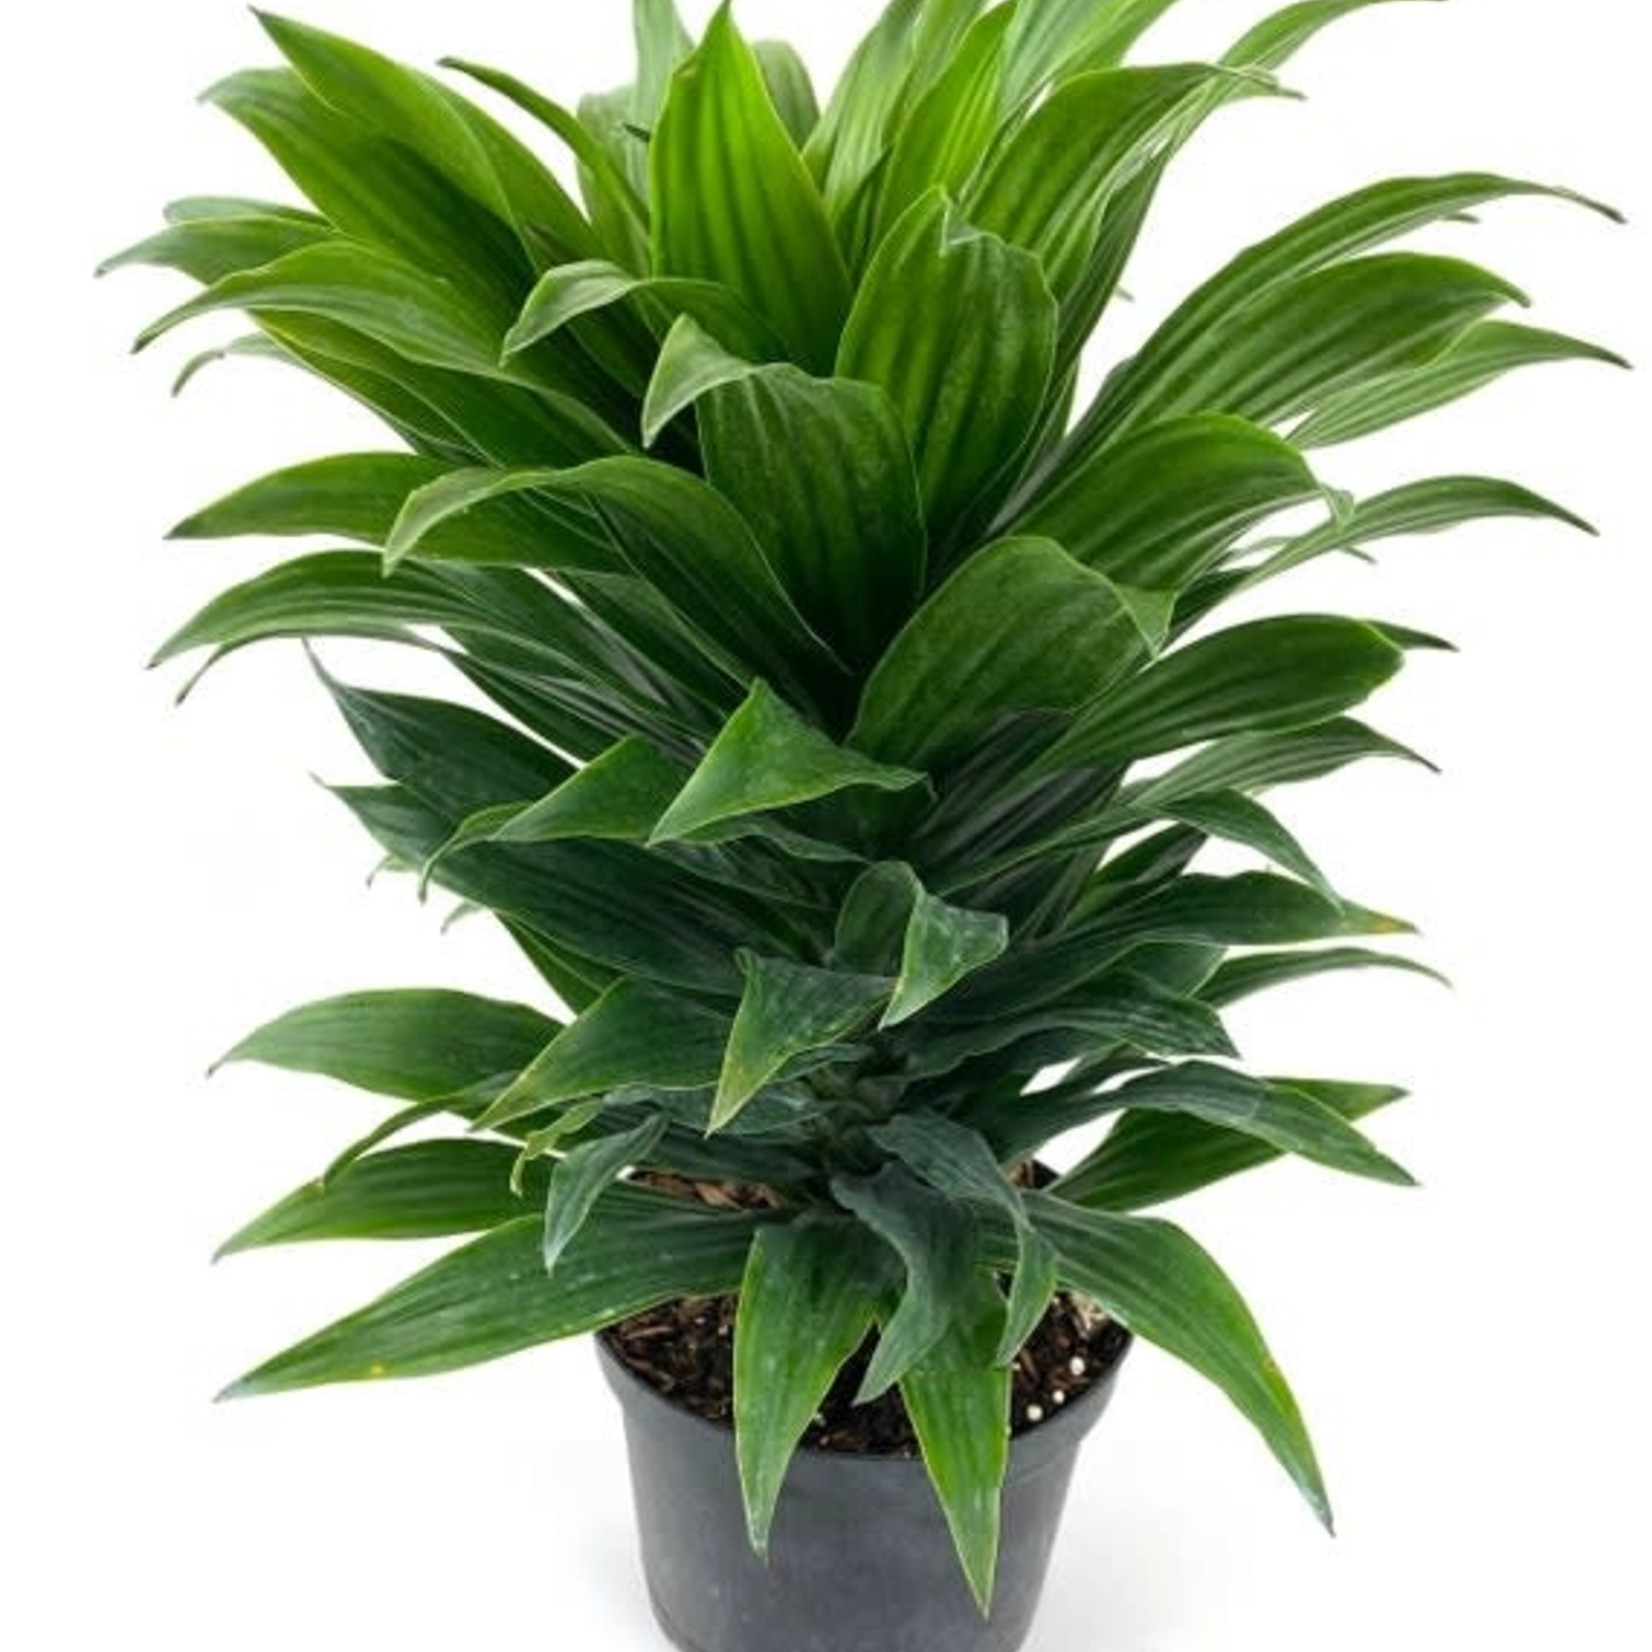 dracaena janet craig plant